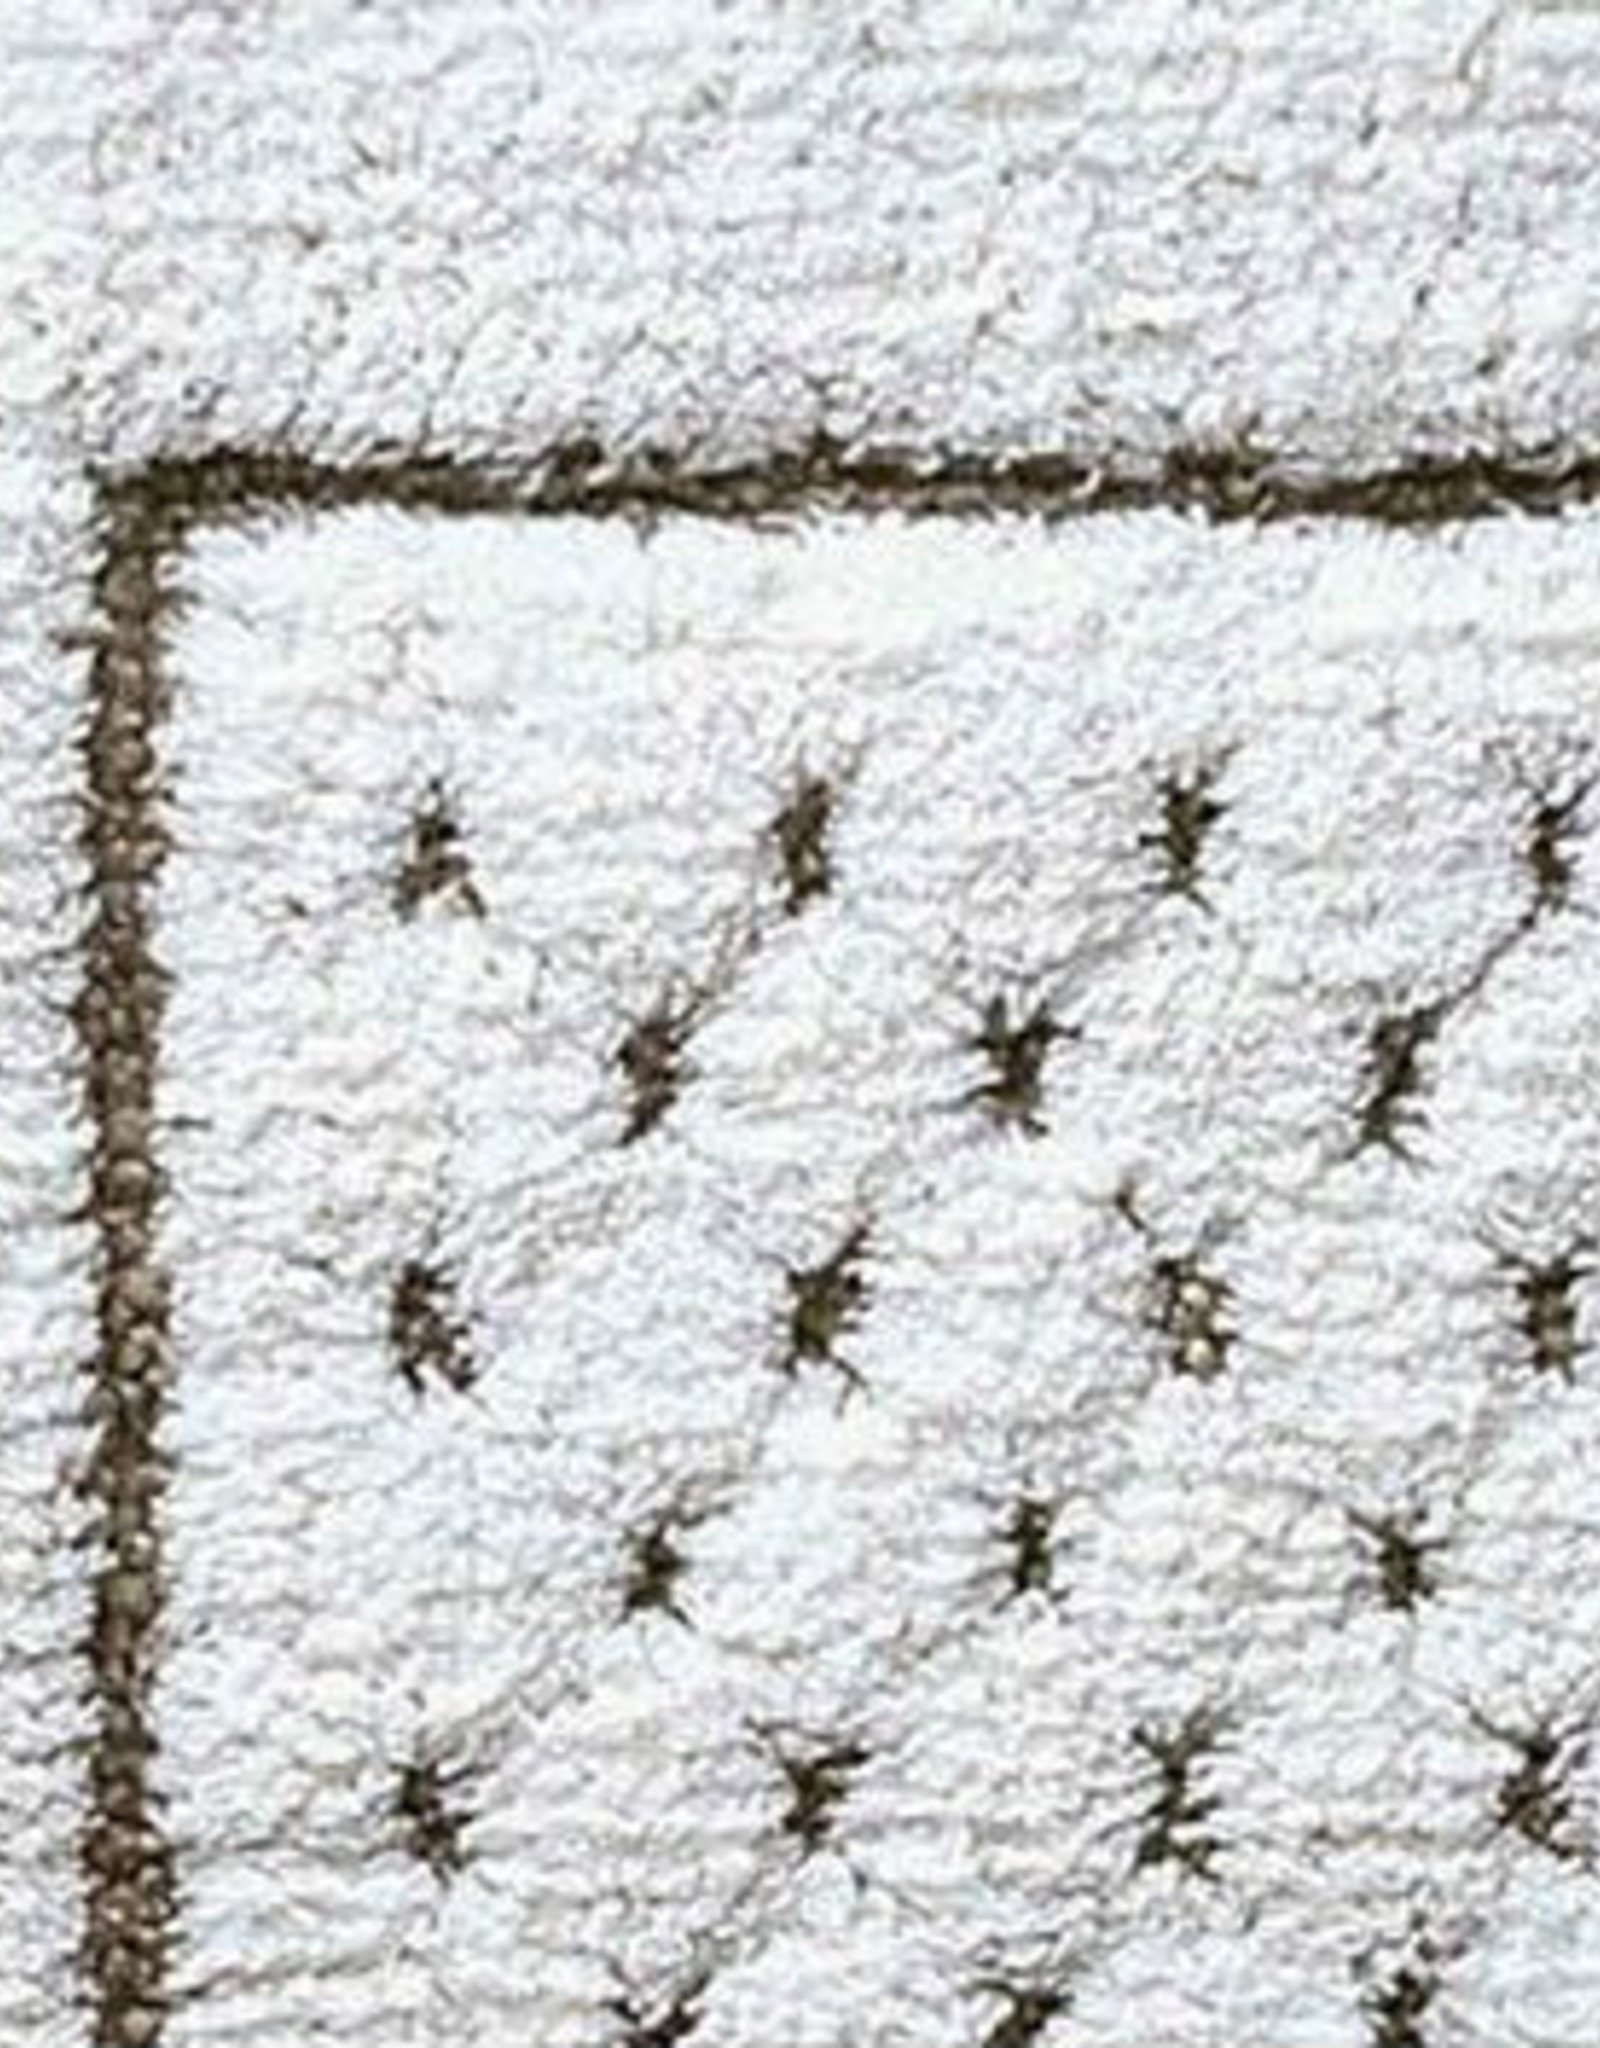 Powder Linen & Cotton Honeycomb Waffle Towel – Linen Tales